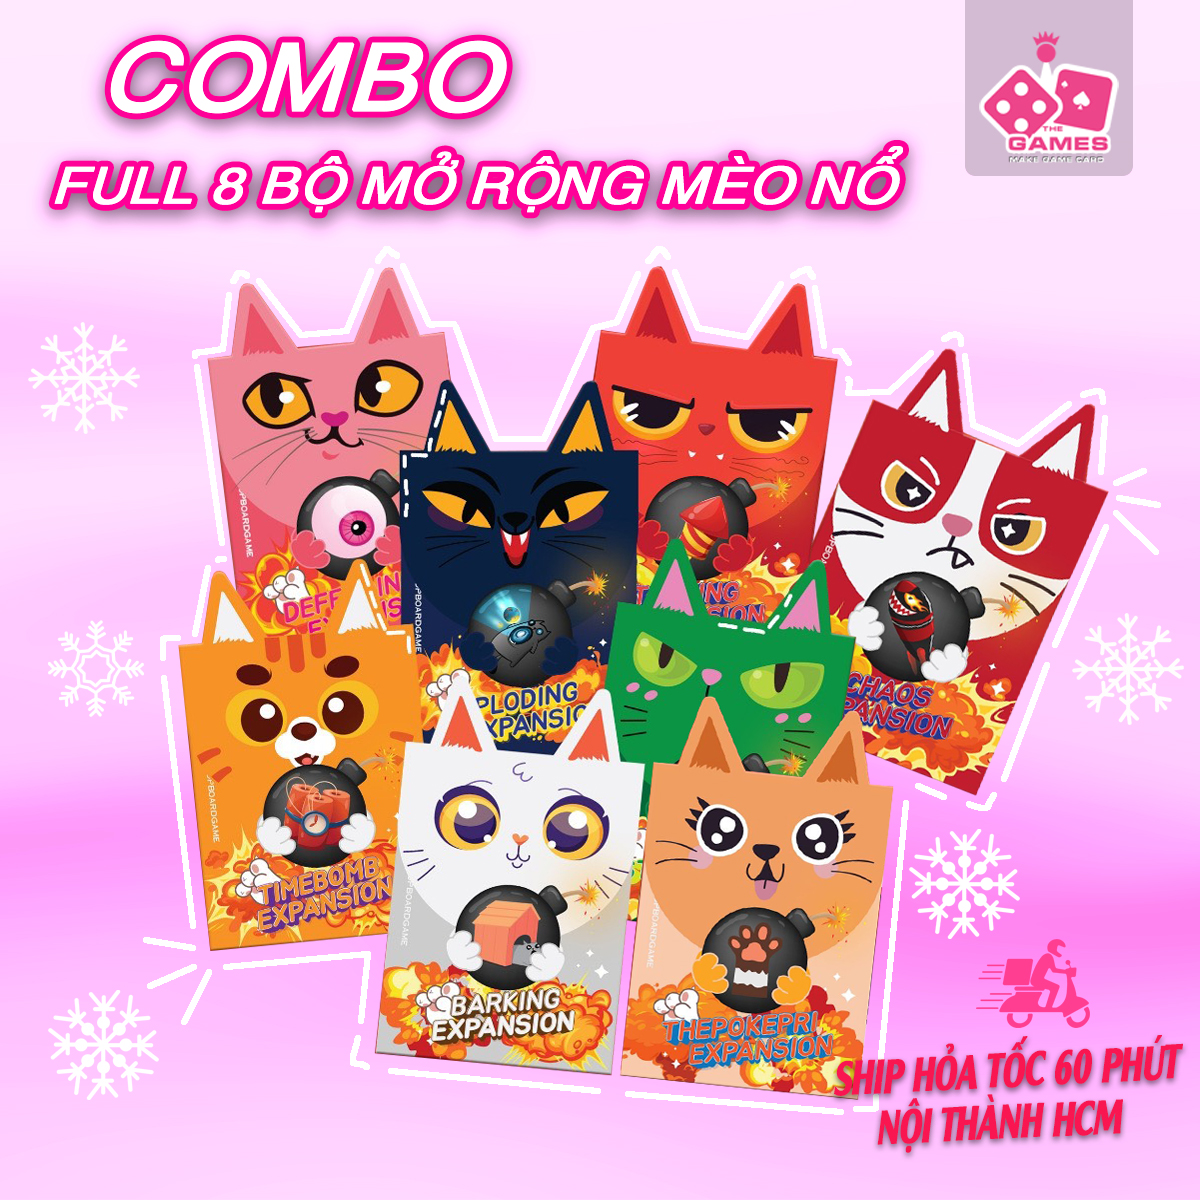 COMBO Mèo Nổ Full 8 Bản mở rộng Exploding kittens